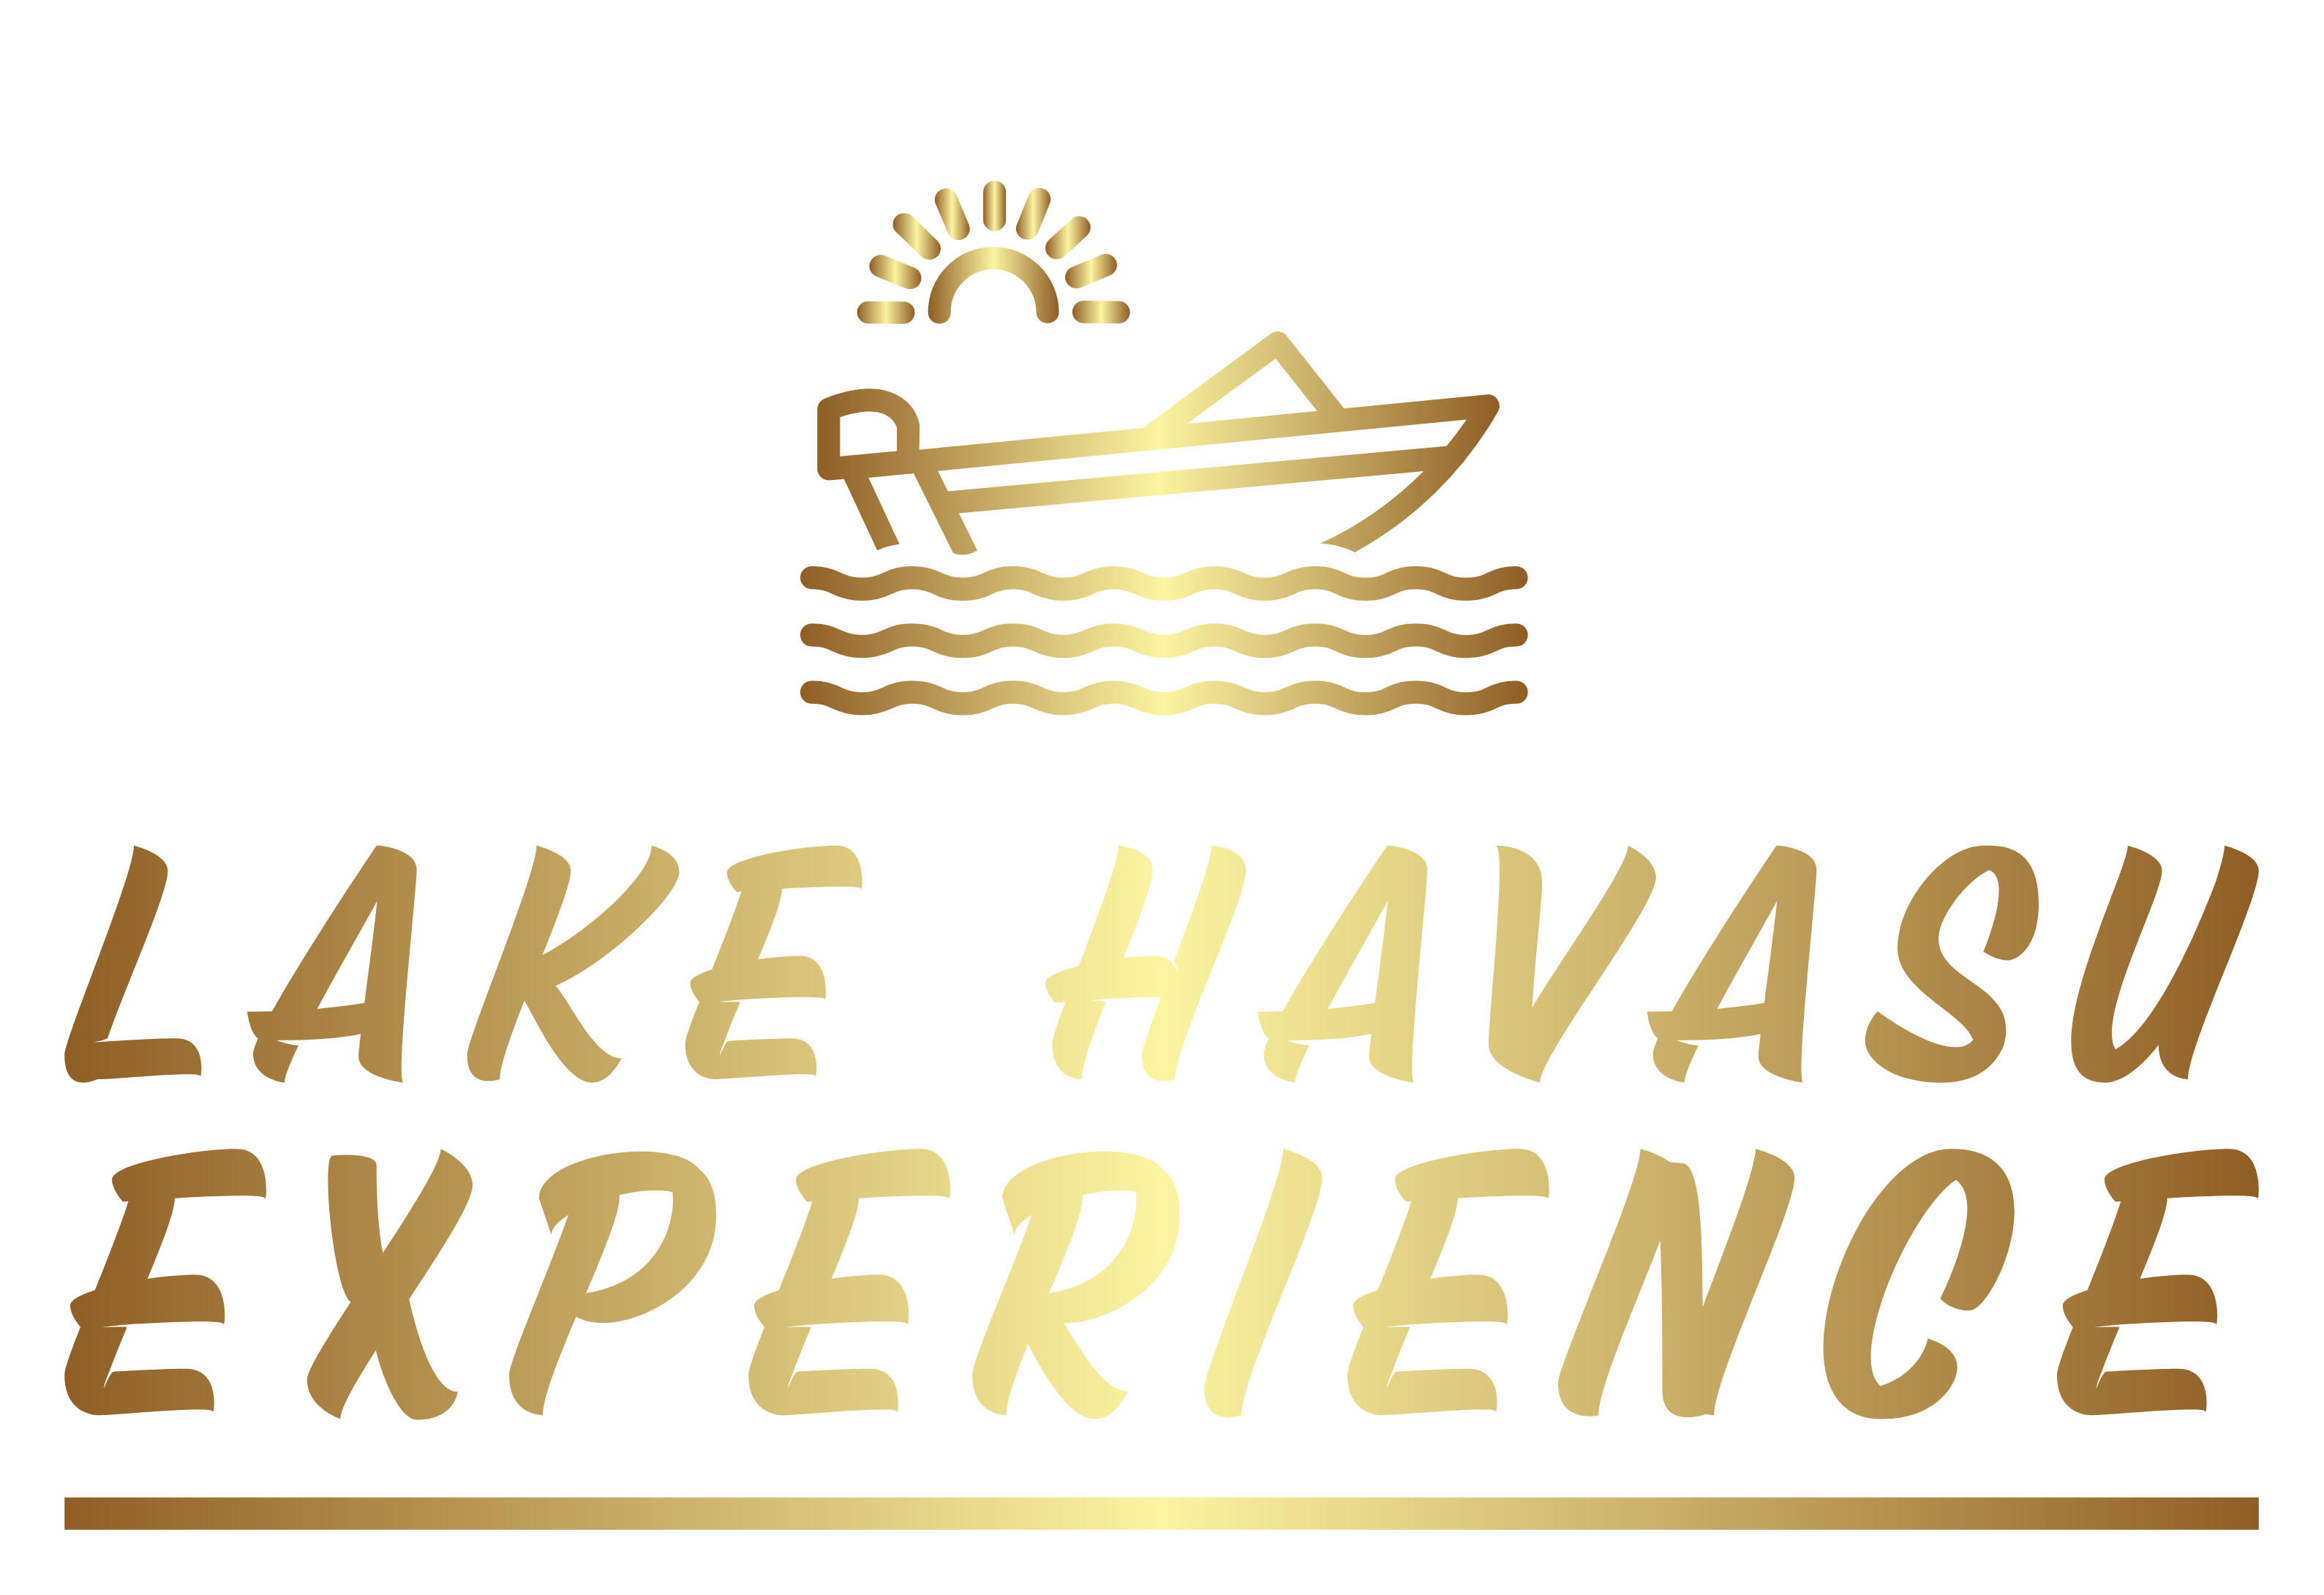 Lake Havasu Experience